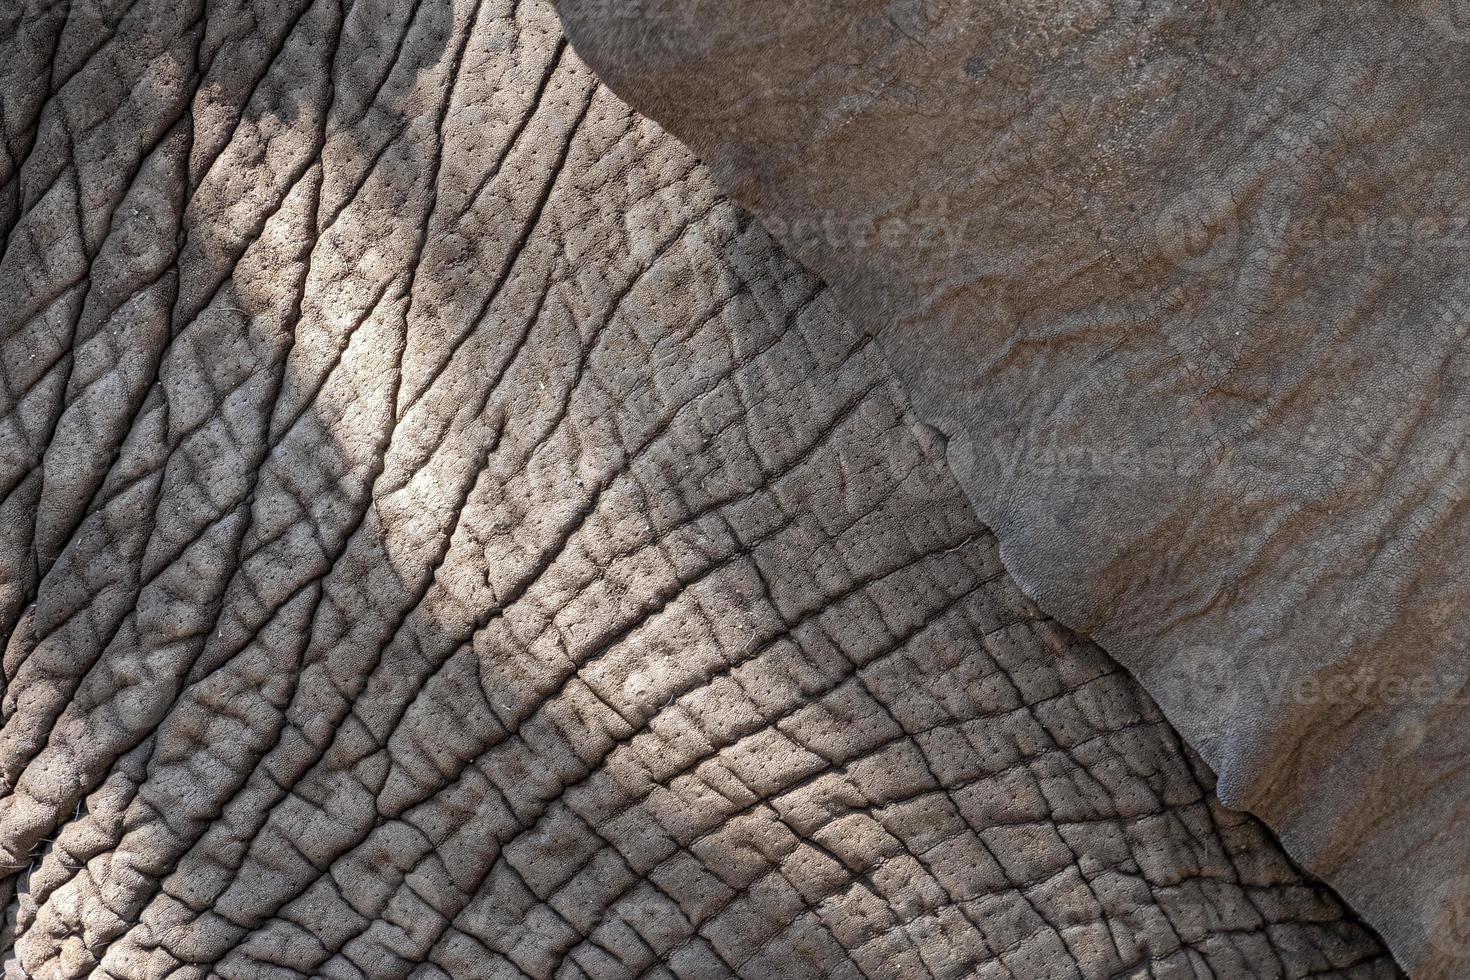 elephant skin close up detail photo